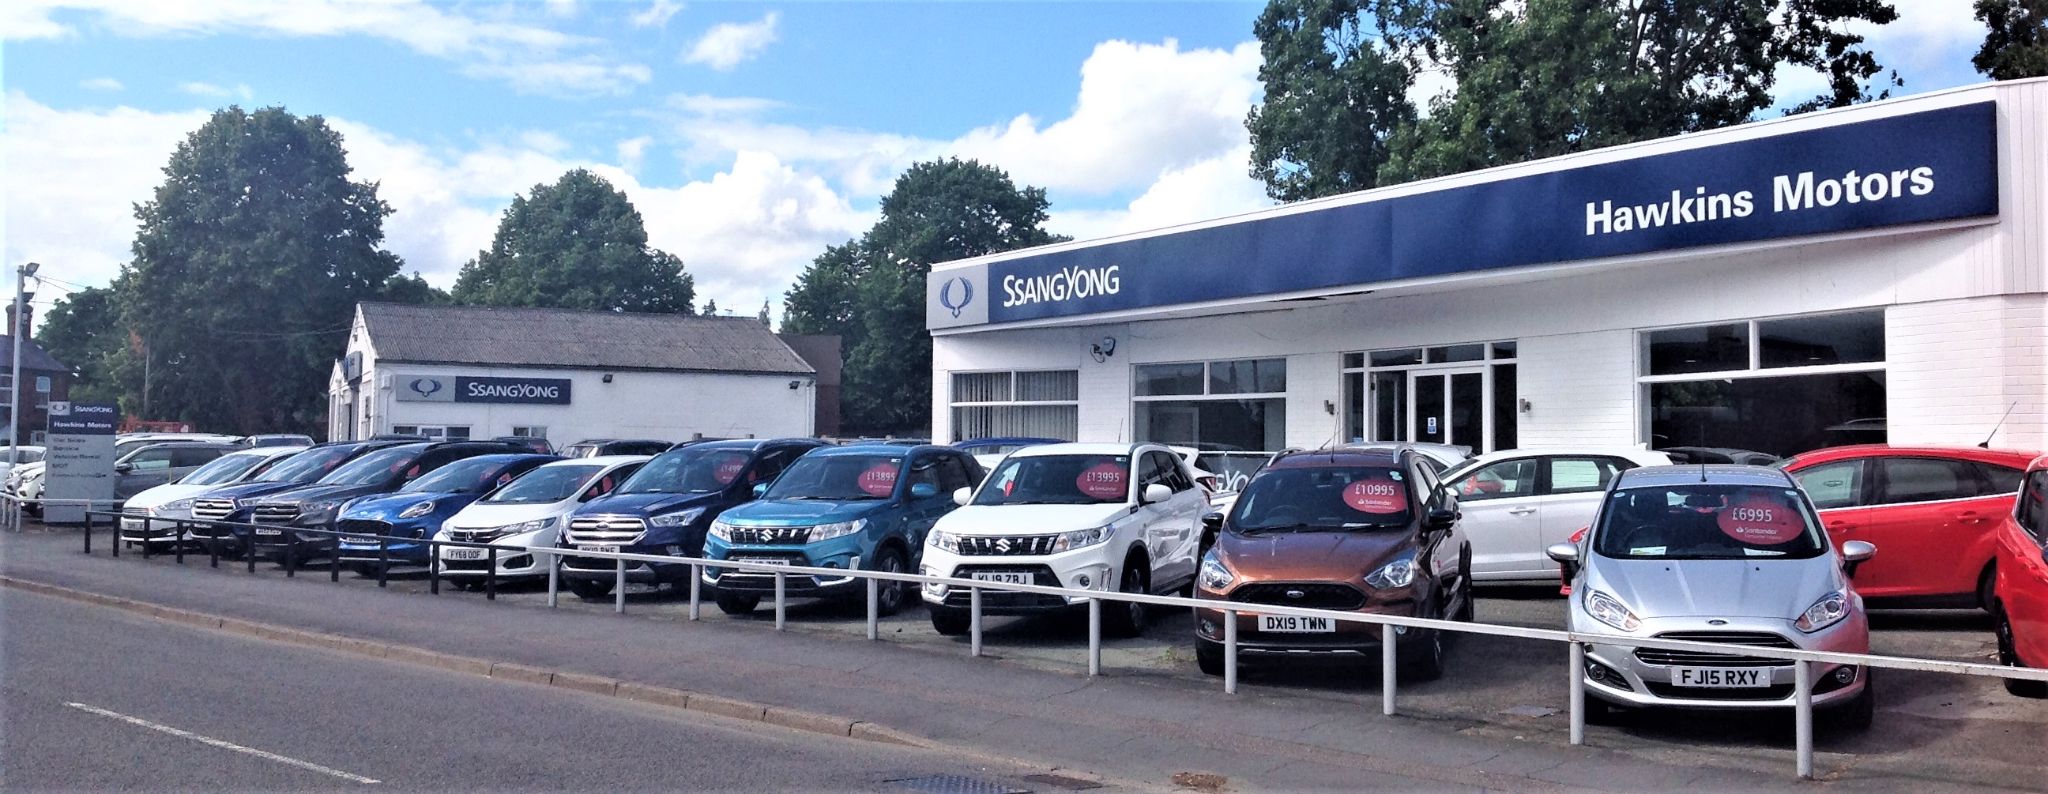 Hawkins Garages (Wem) | Car dealership in Shrewsbury | AutoTrader